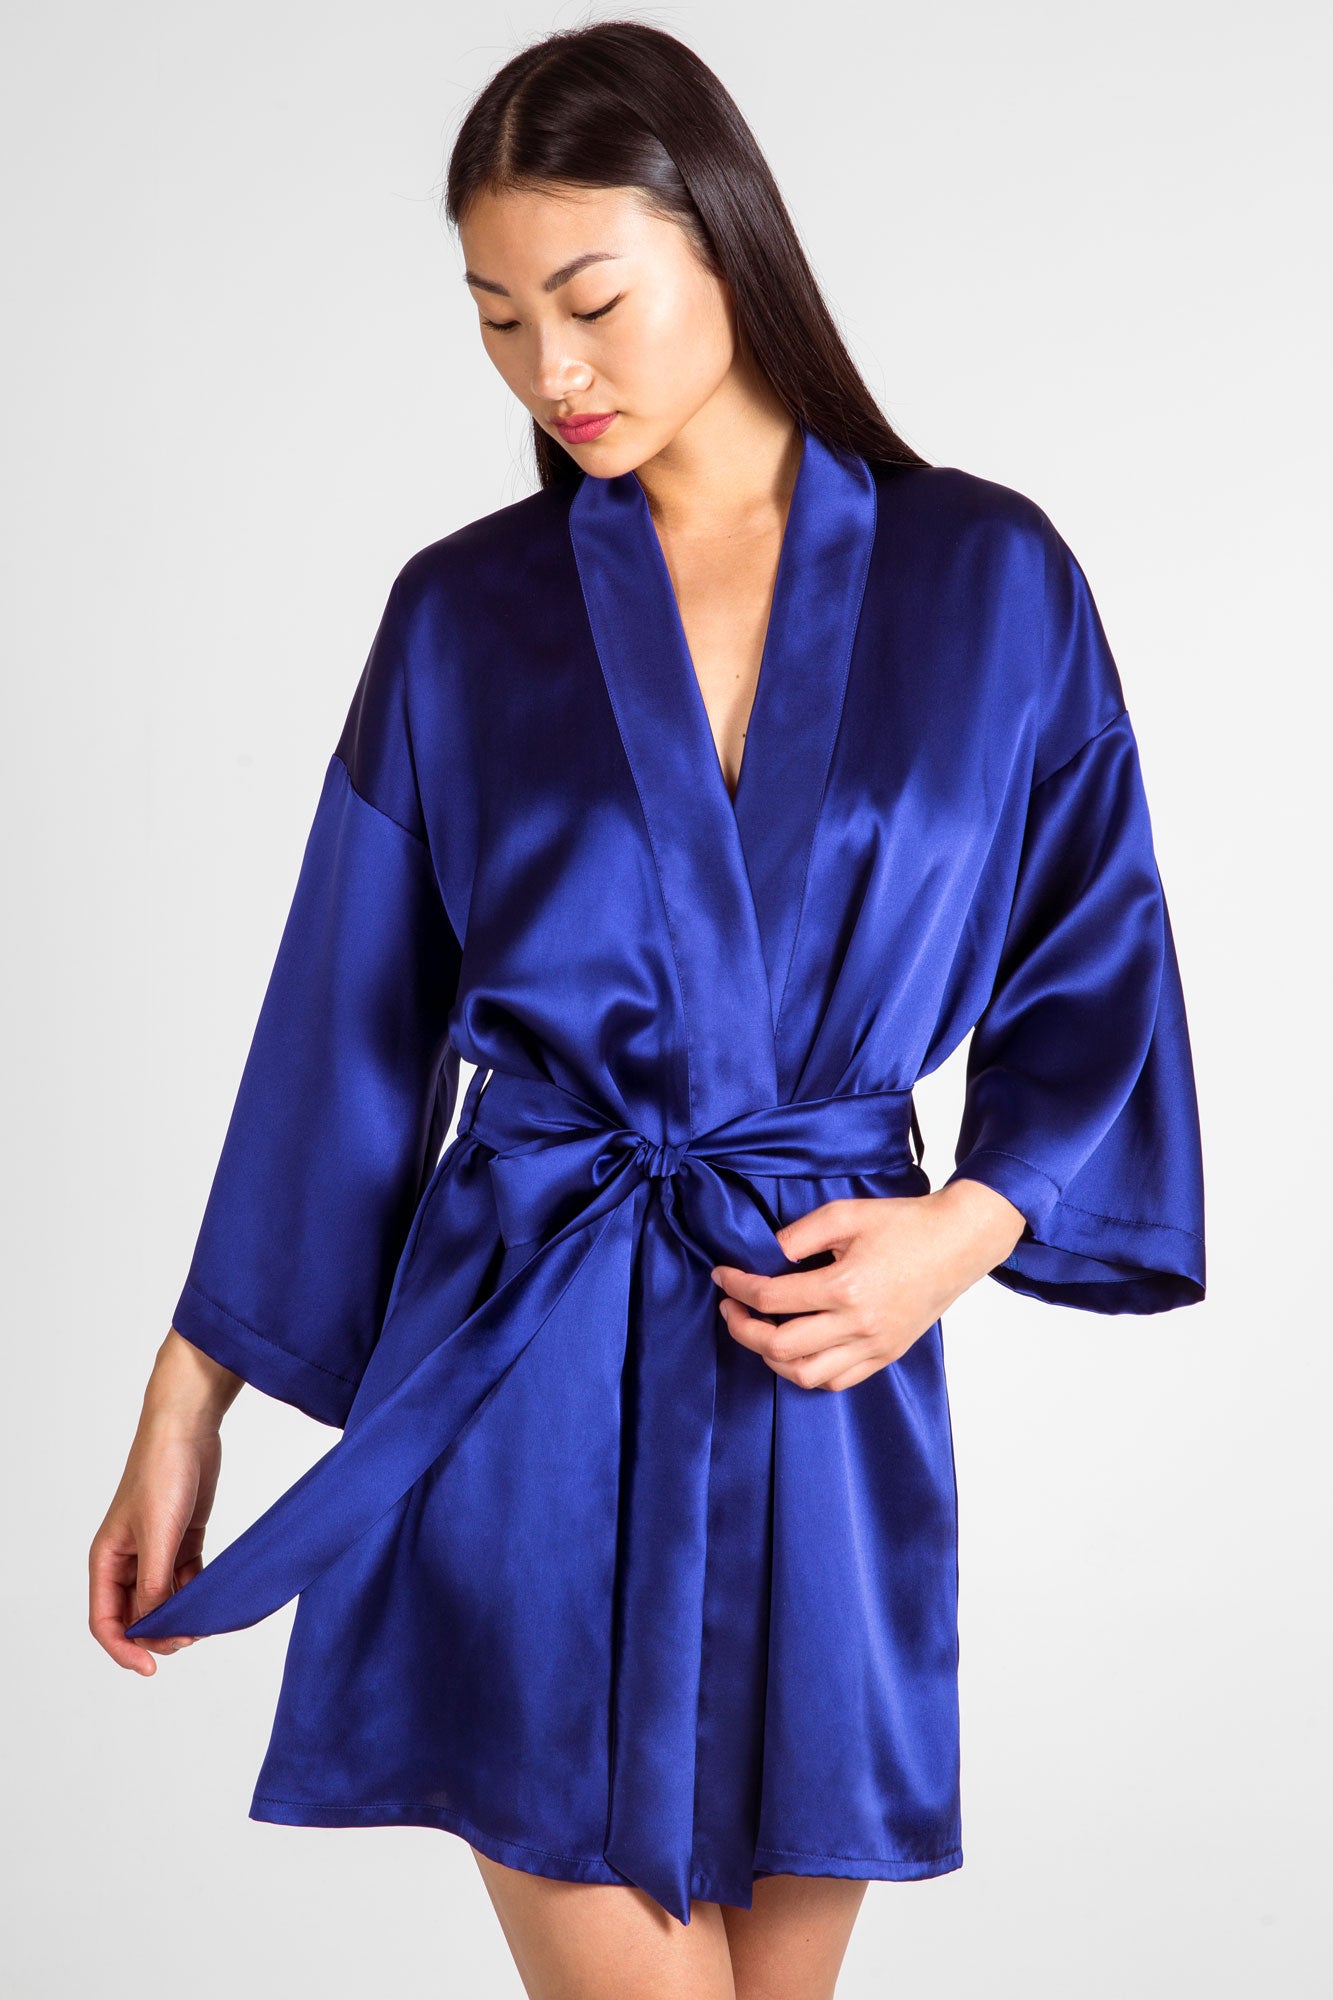 100% silk satin robe in indigo blue by luxury loungewear designer Angela Friedman